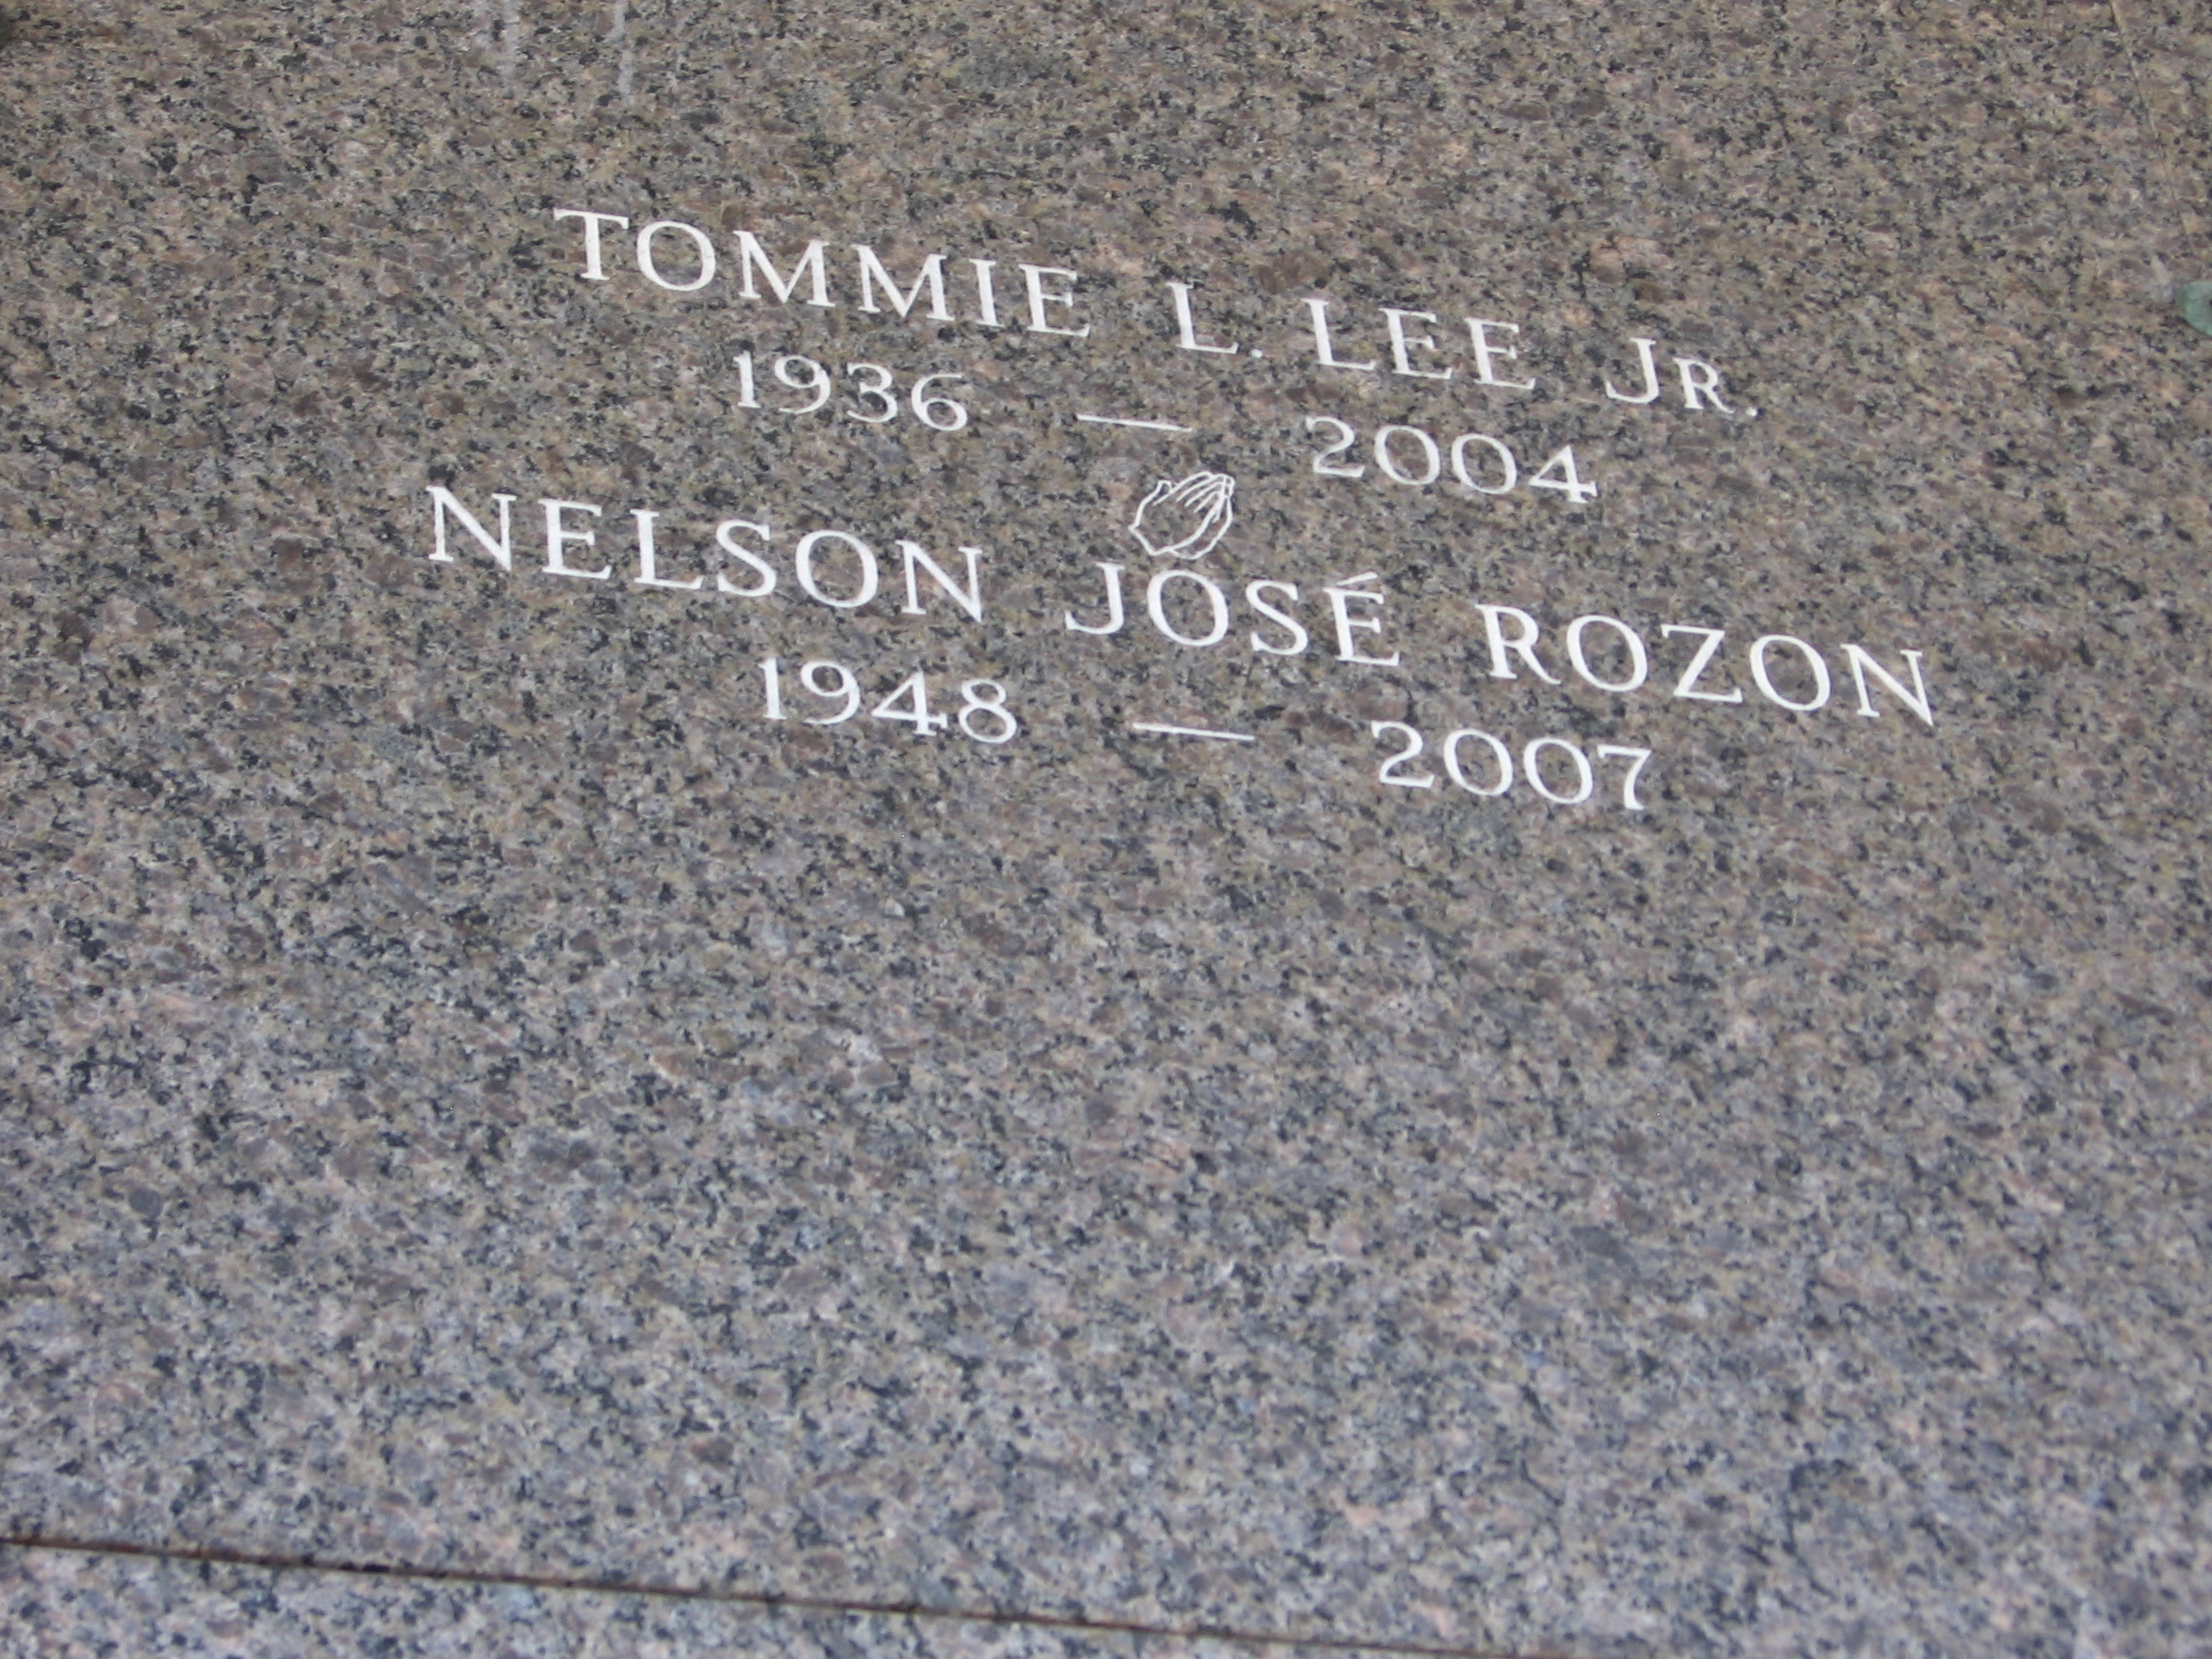 Nelson Jose Rozon